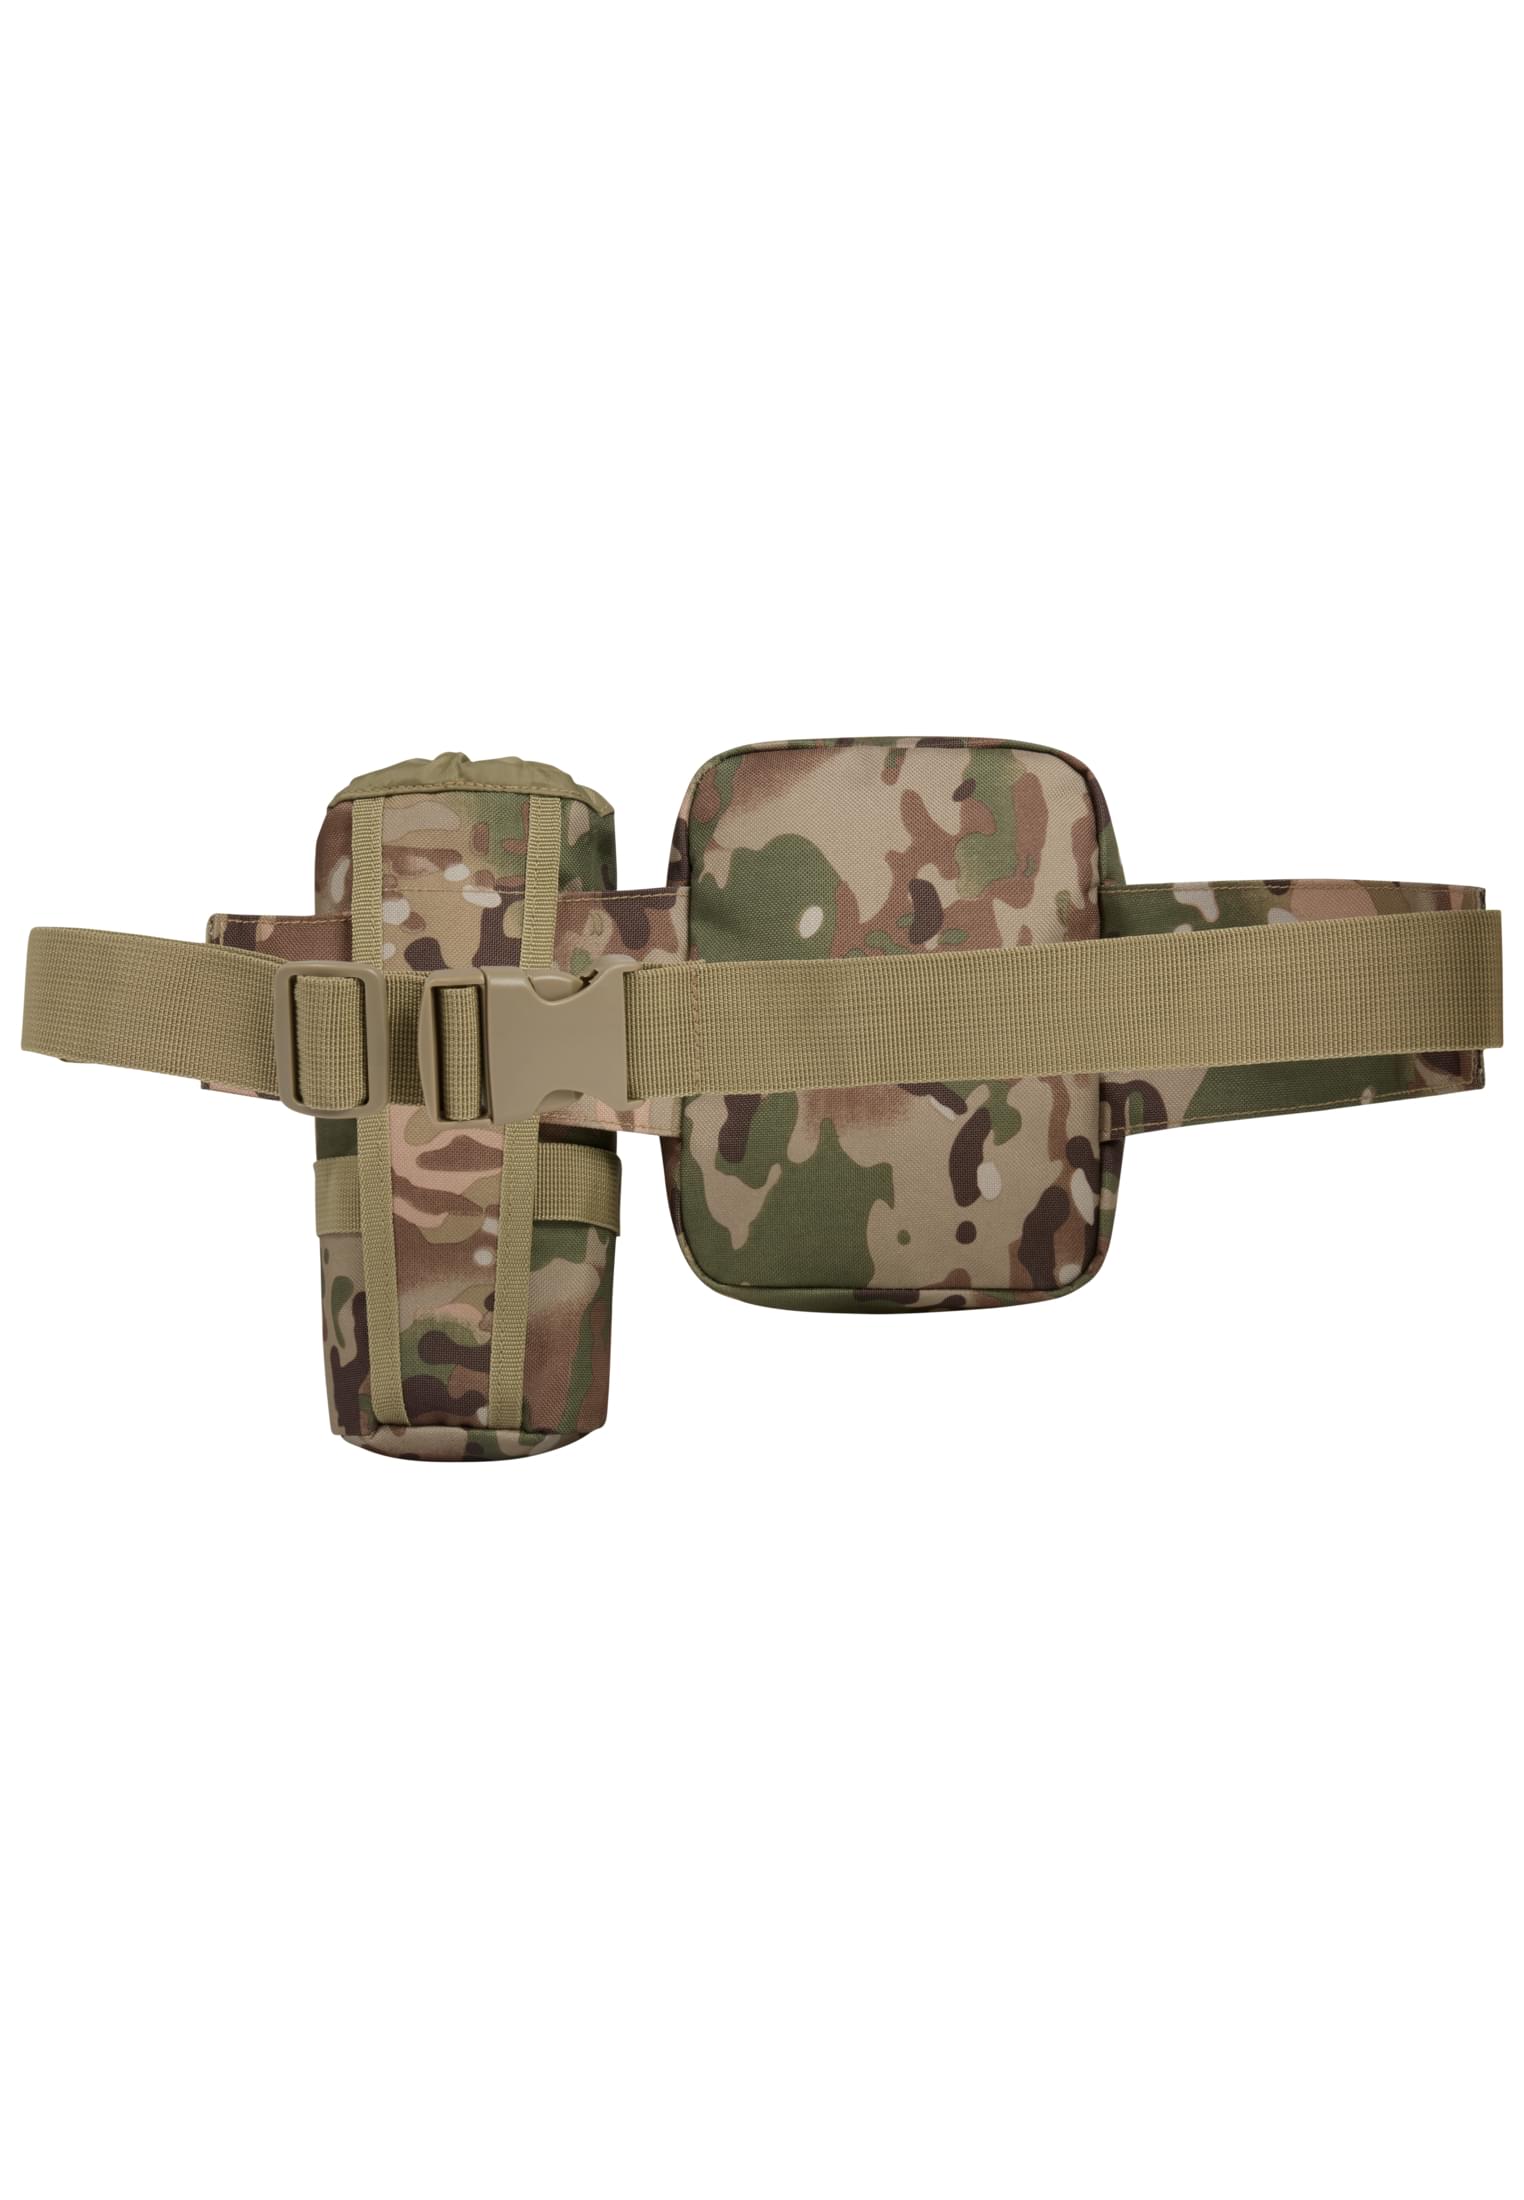 Taschen waistbeltbag Allround in Farbe tactical camo